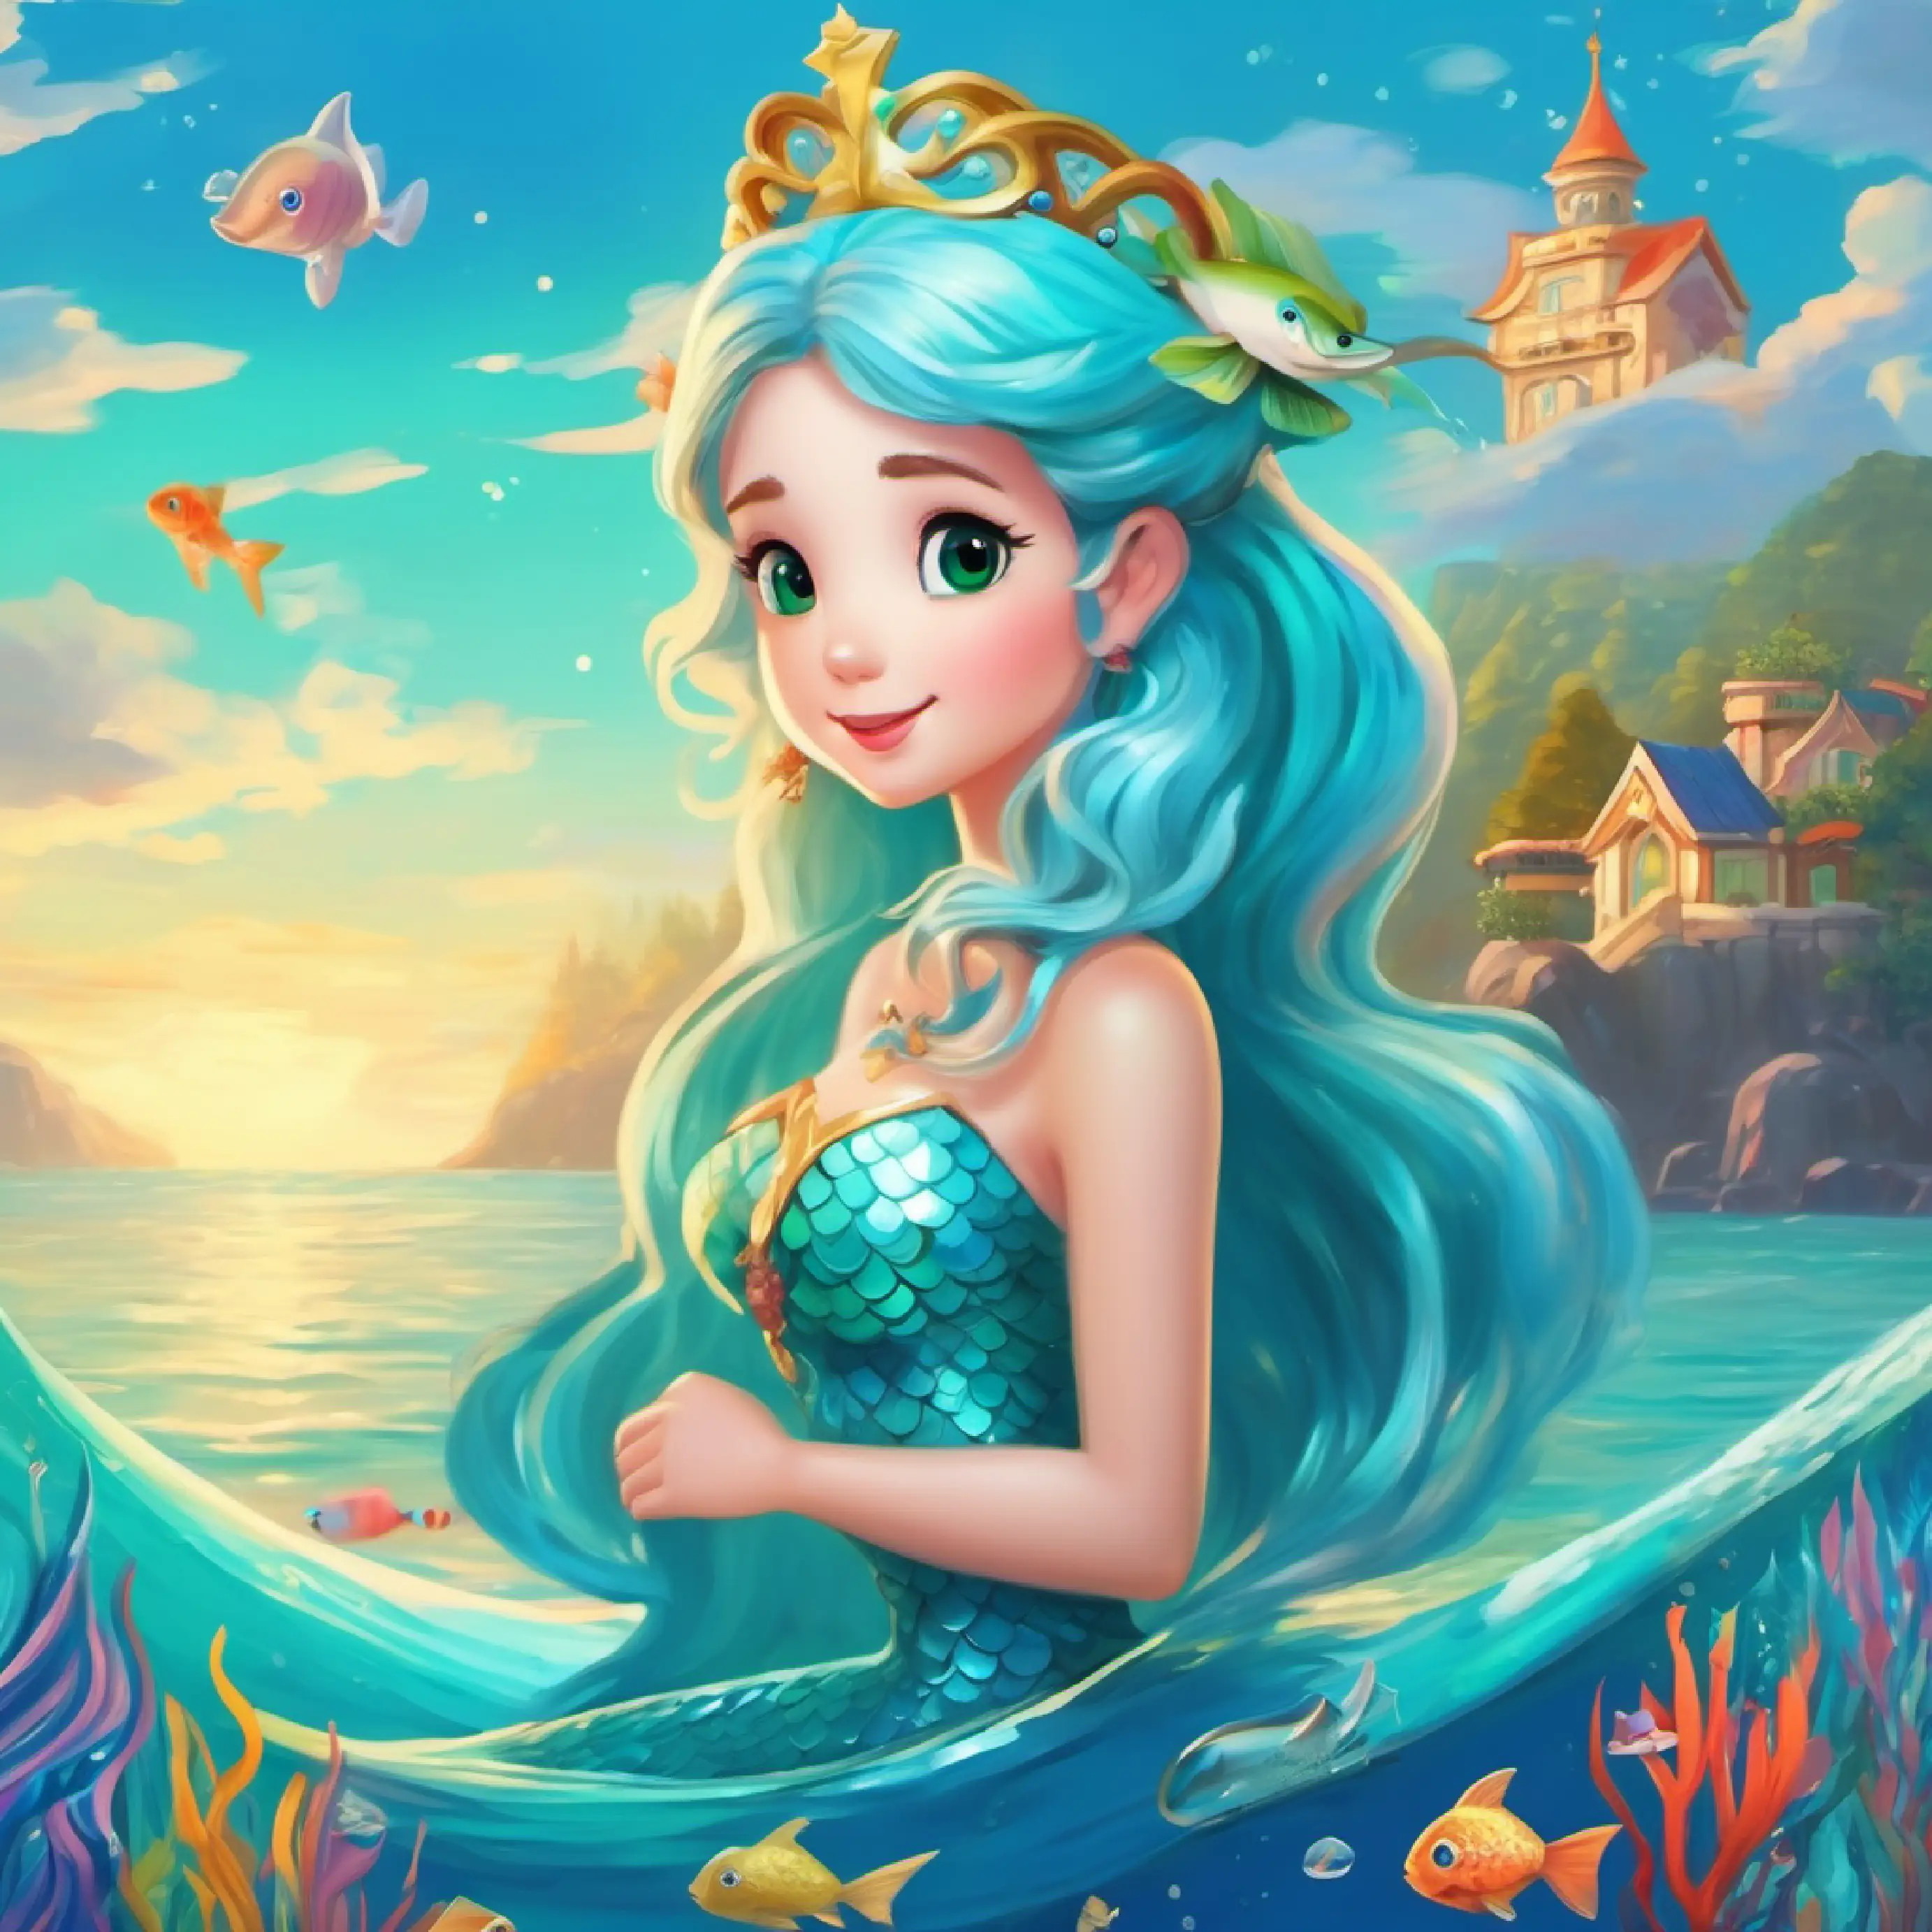 Introducing Mermaid princess with sky-blue tail and long aqua hair, a mermaid princess, in the Ocean Kingdom.